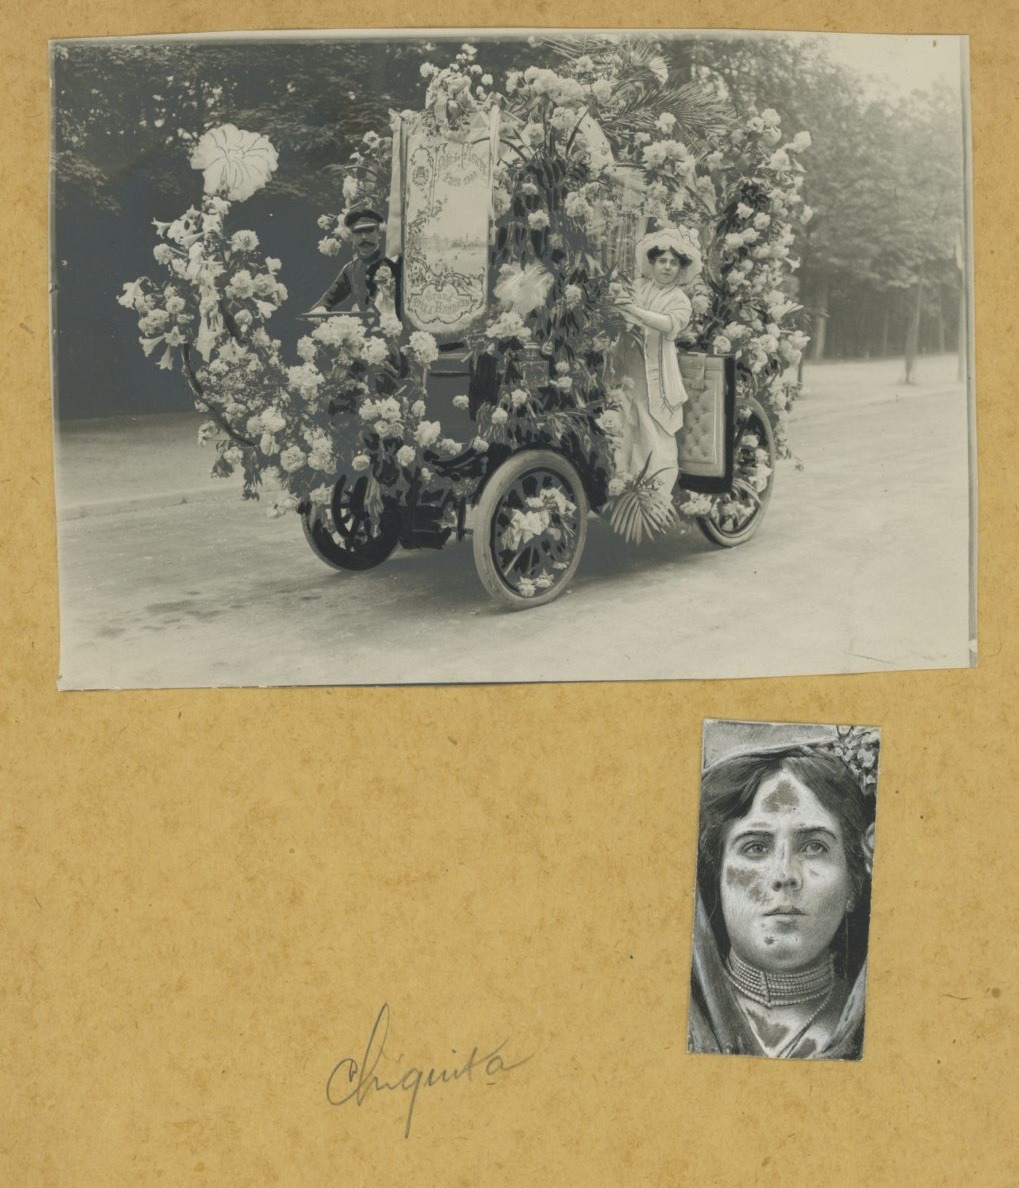 Fête des Flowers, Vintage Chiquita Print2 snapshots of 11 x 15cm and 3 x 6cm on